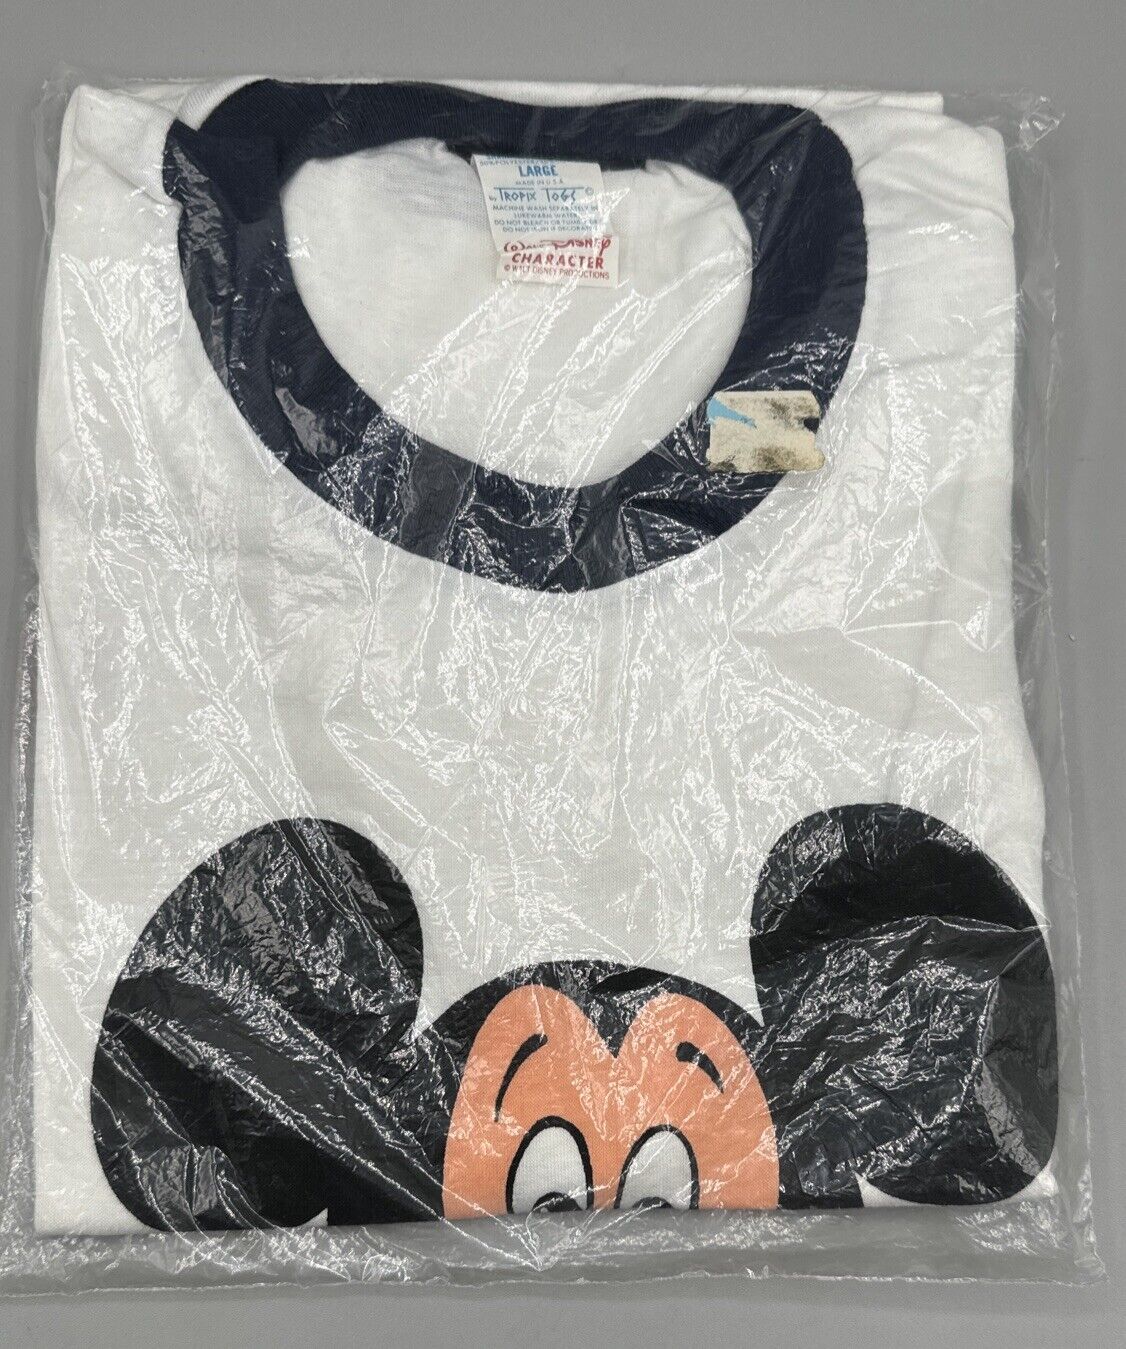 Vintage 70s Walt Disney World Mickey Mouse Ringer T-Shirt Large Tropix Togs New